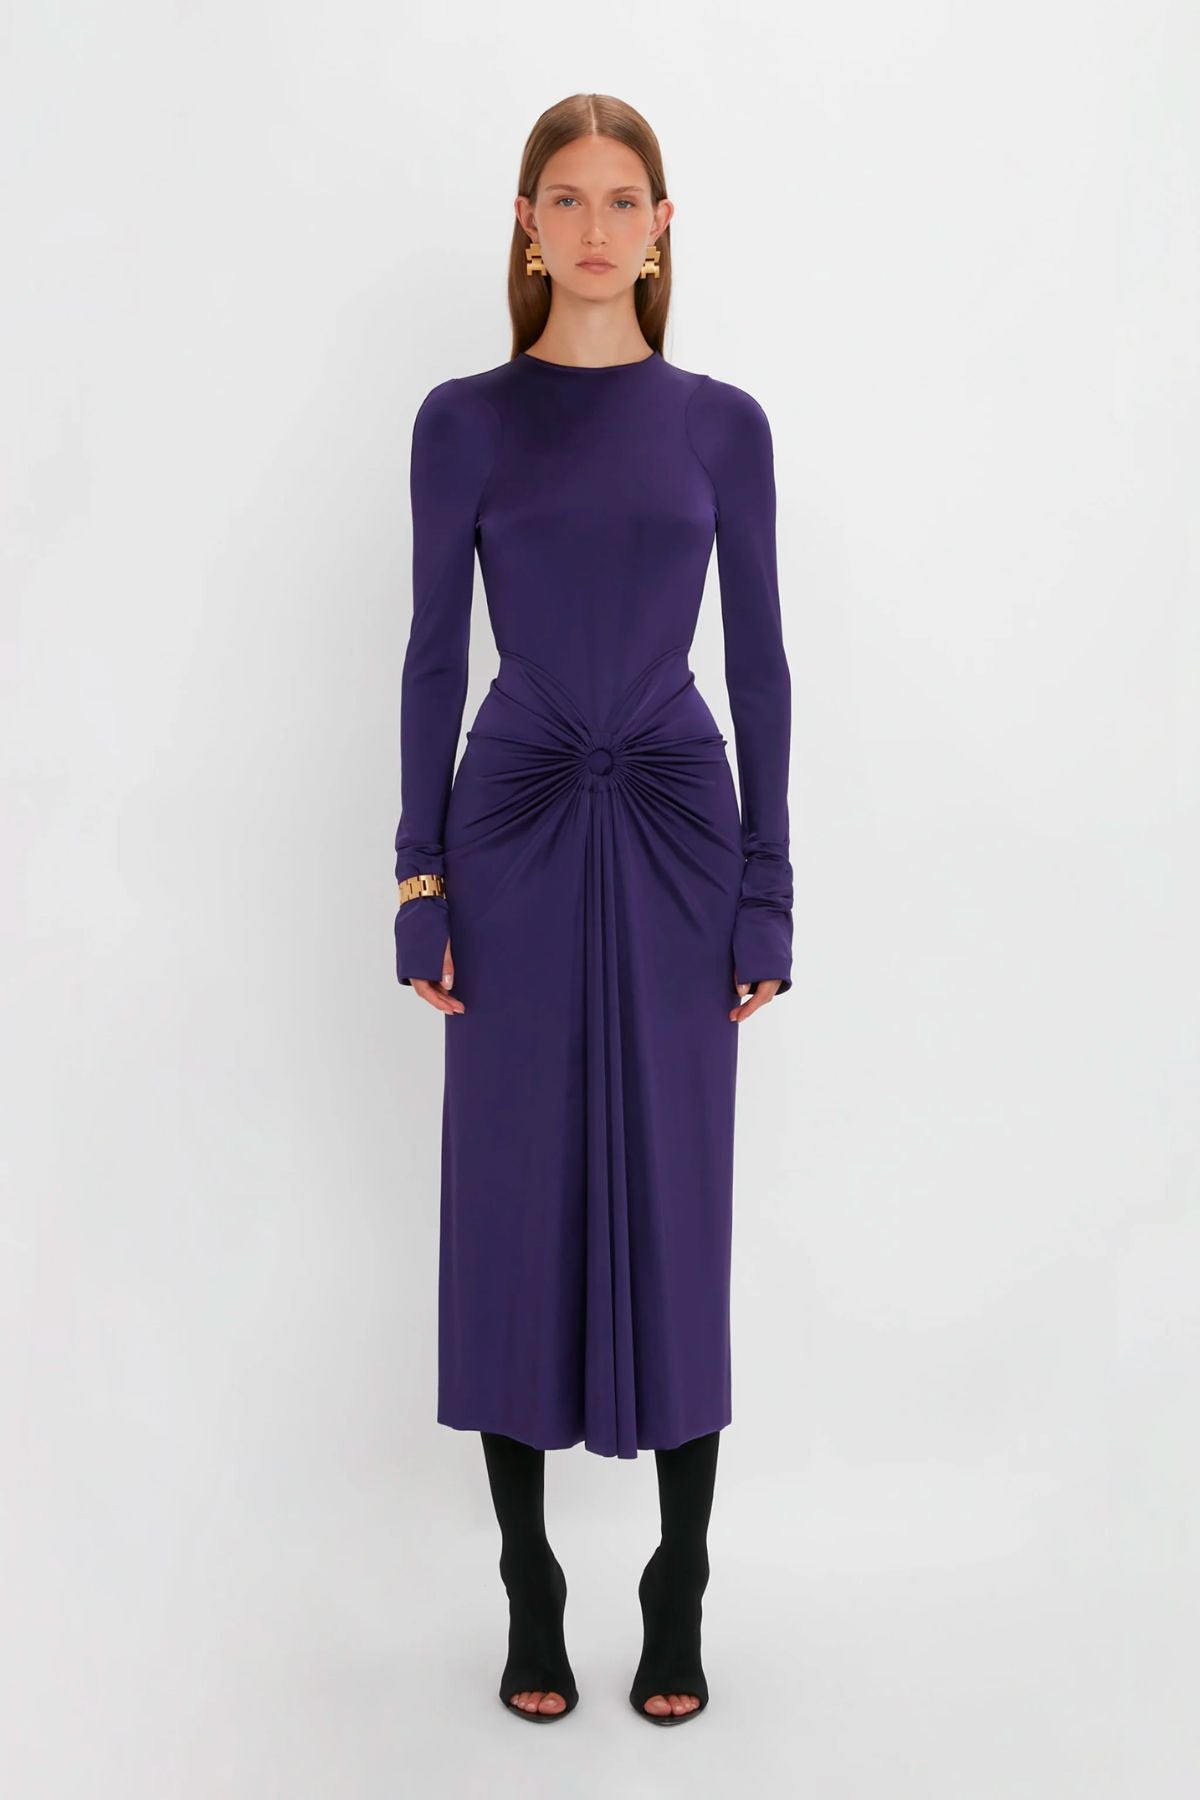 Victoria Beckham Gathered Midi Dress - Ultraviolet